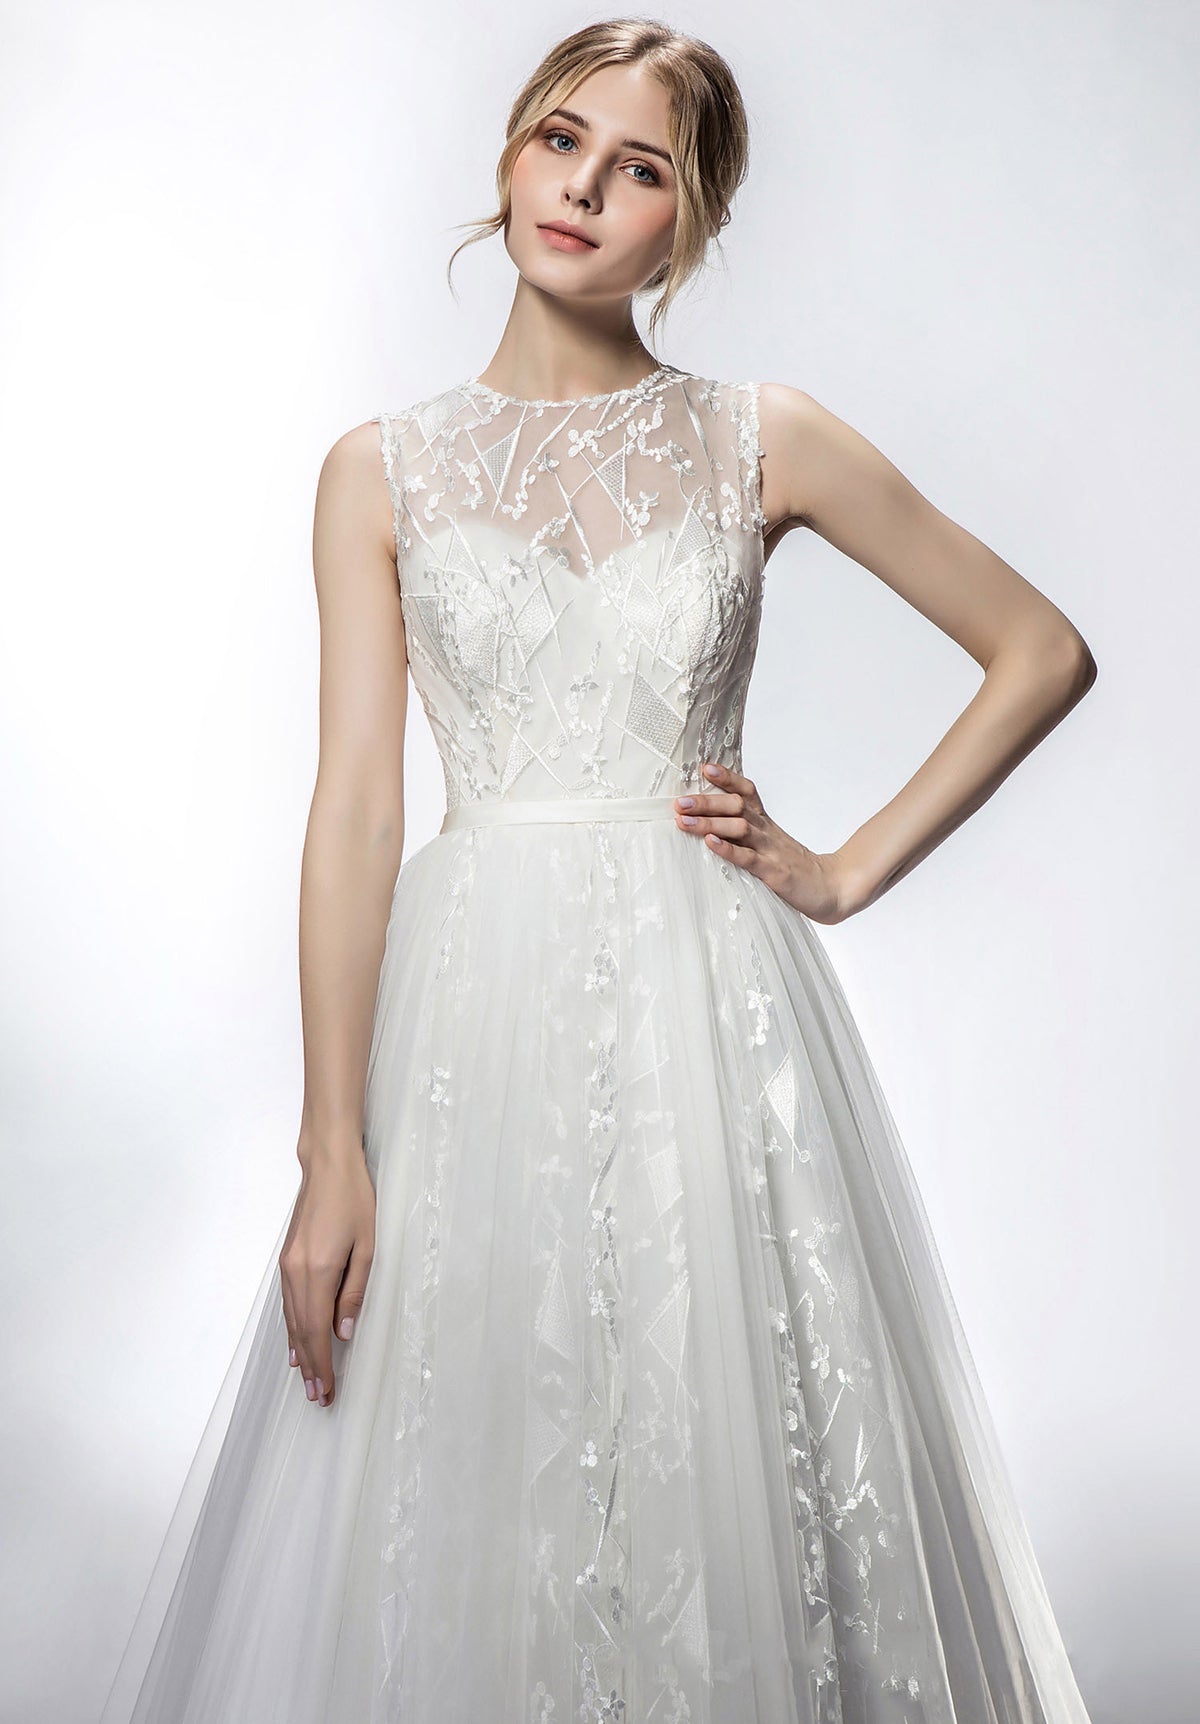 Romantic Wedding Dress With Lace Appliques